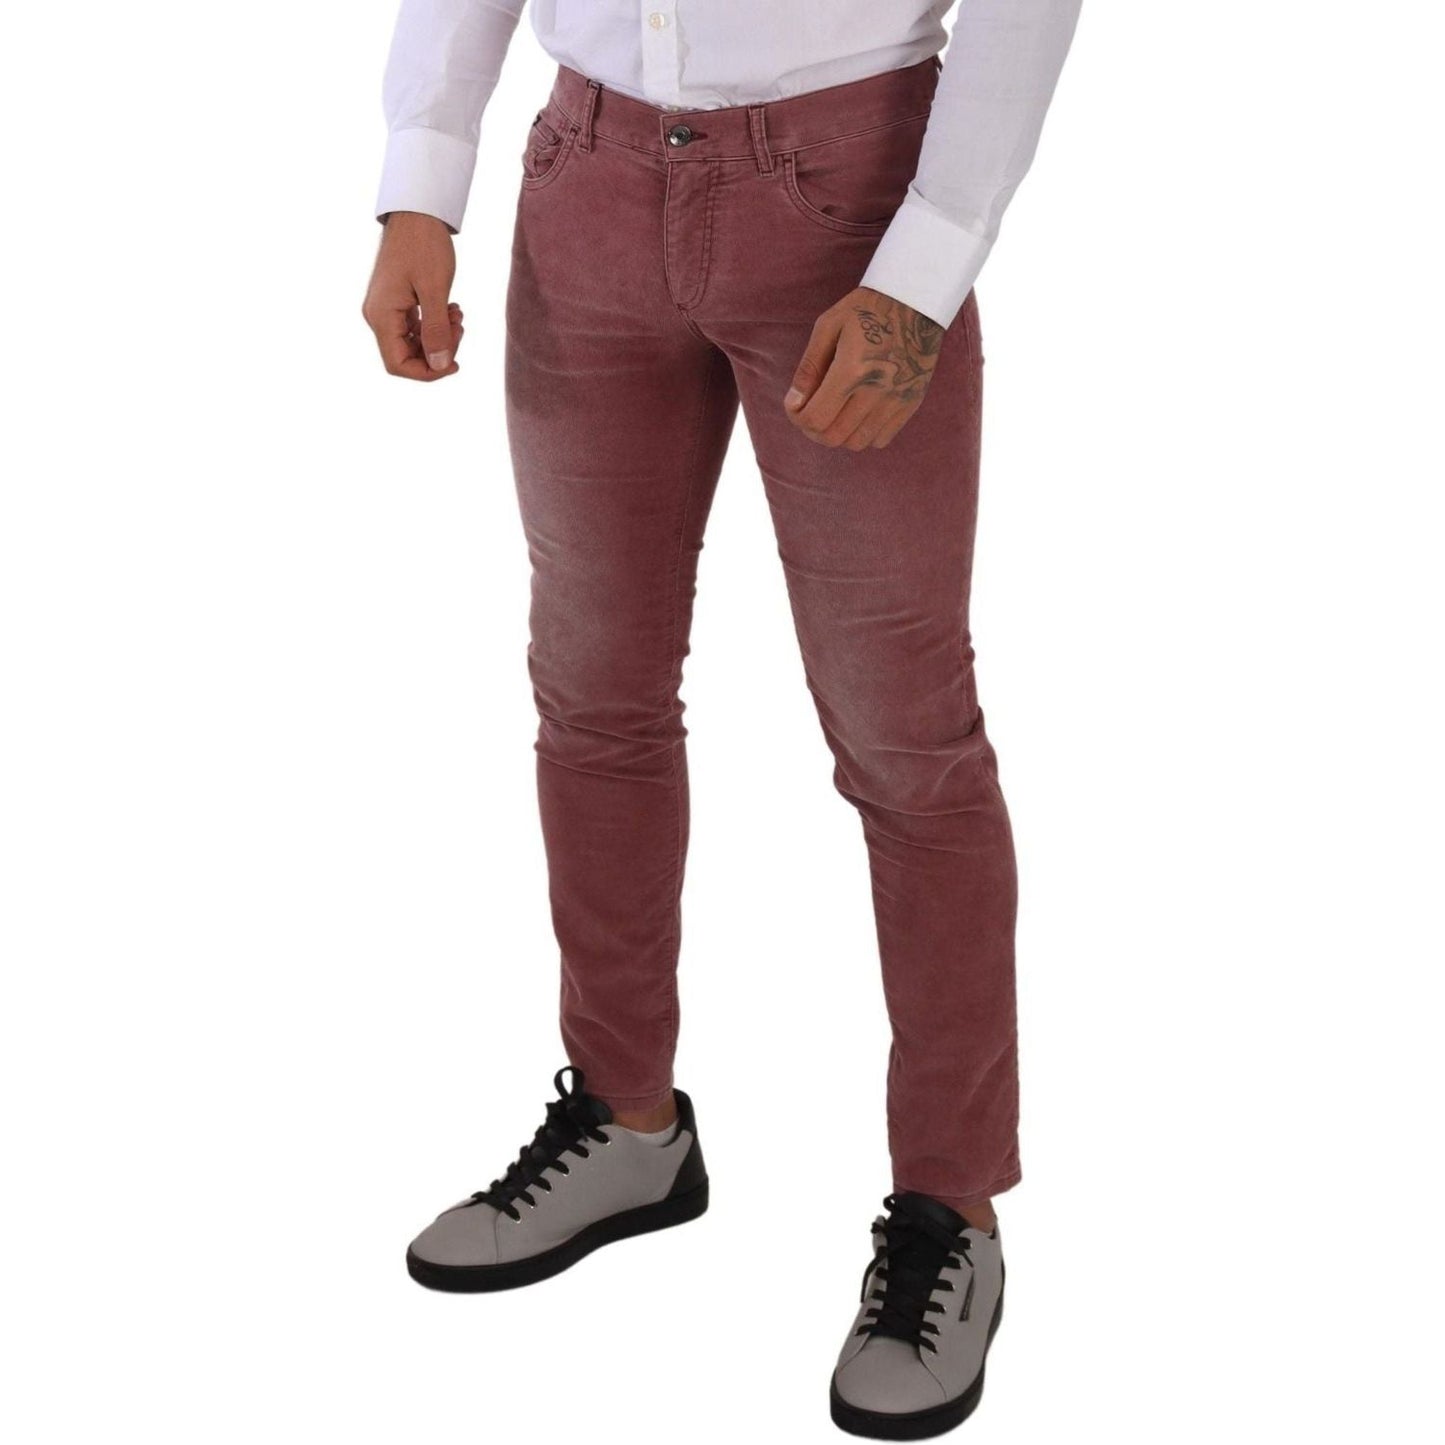 Dolce & Gabbana Elegant Slim Fit Corduroy Jeans pink-corduroy-cotton-skinny-men-denim-jeans IMG_1592-1435ab9a-e27.jpg